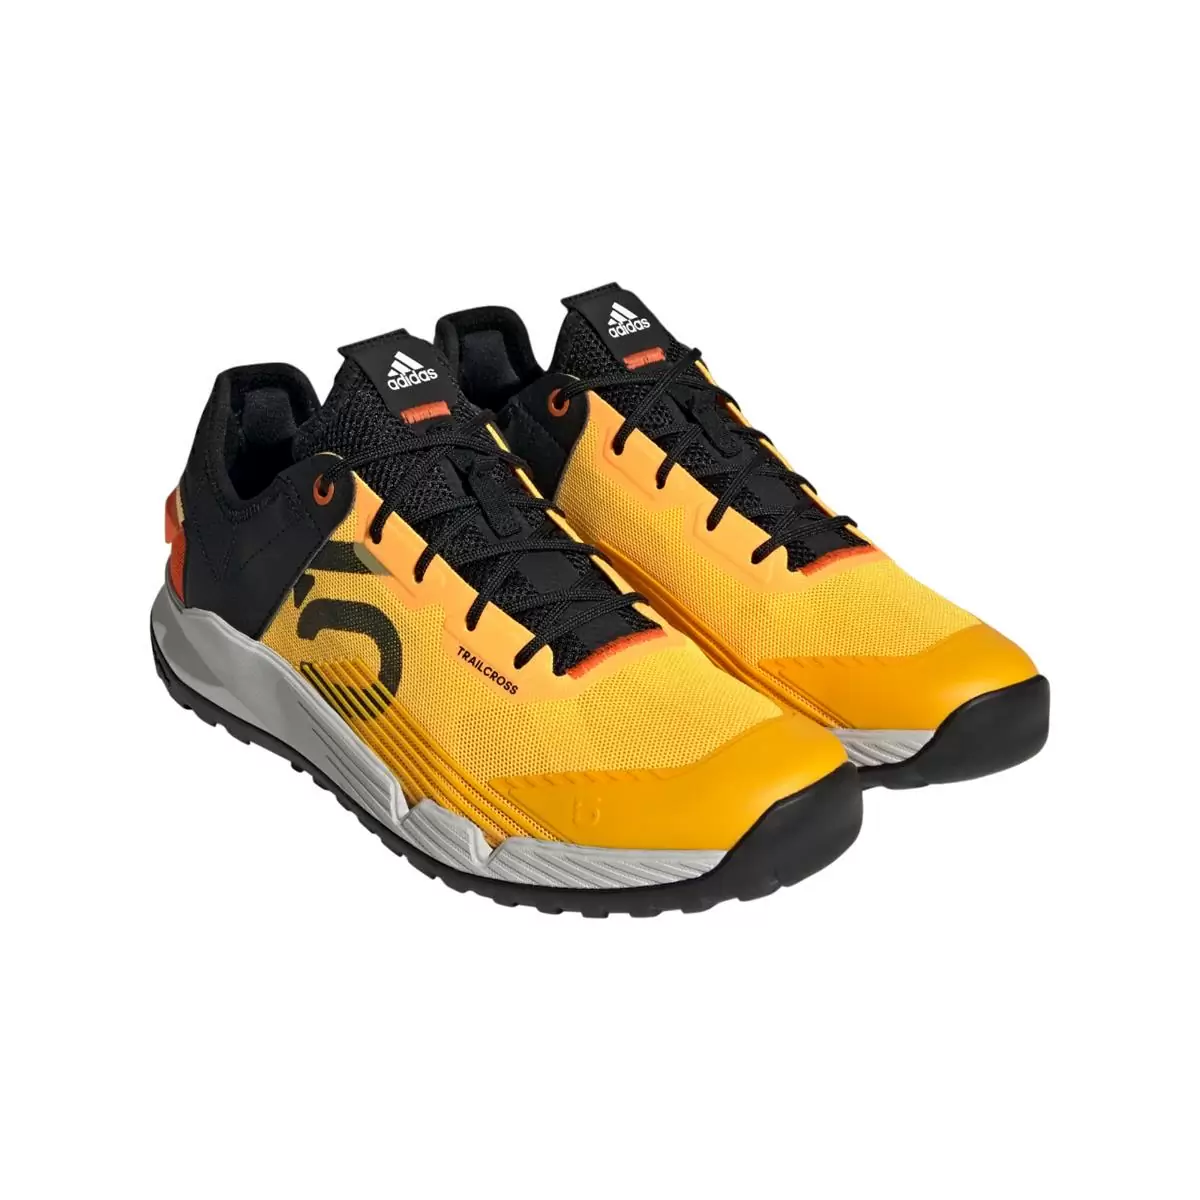 Flat MTB Shoes 5.10 Trailcross LT Black/Orange Size 40 #4